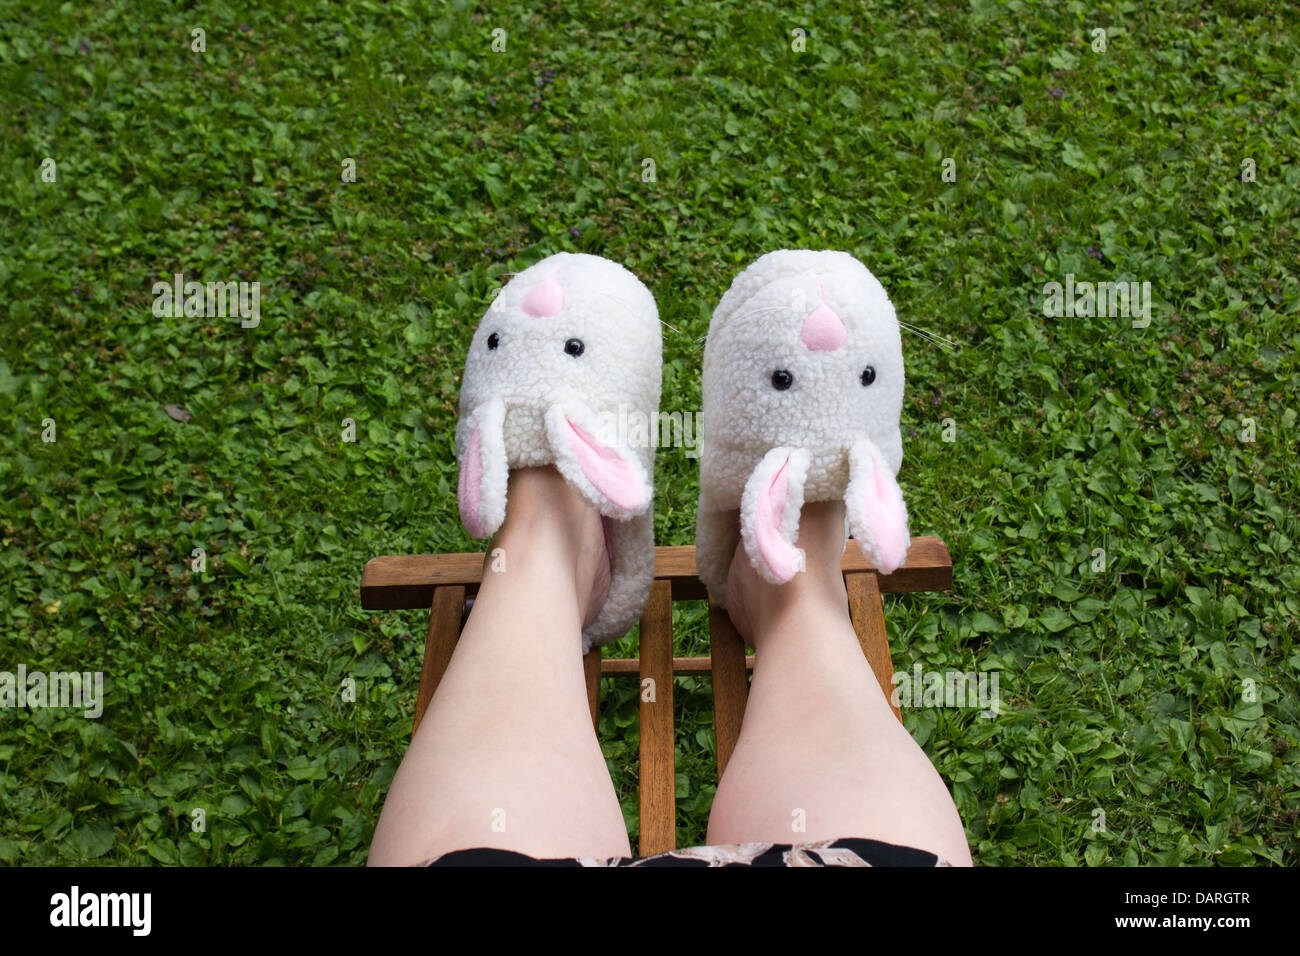 bunny feet slippers